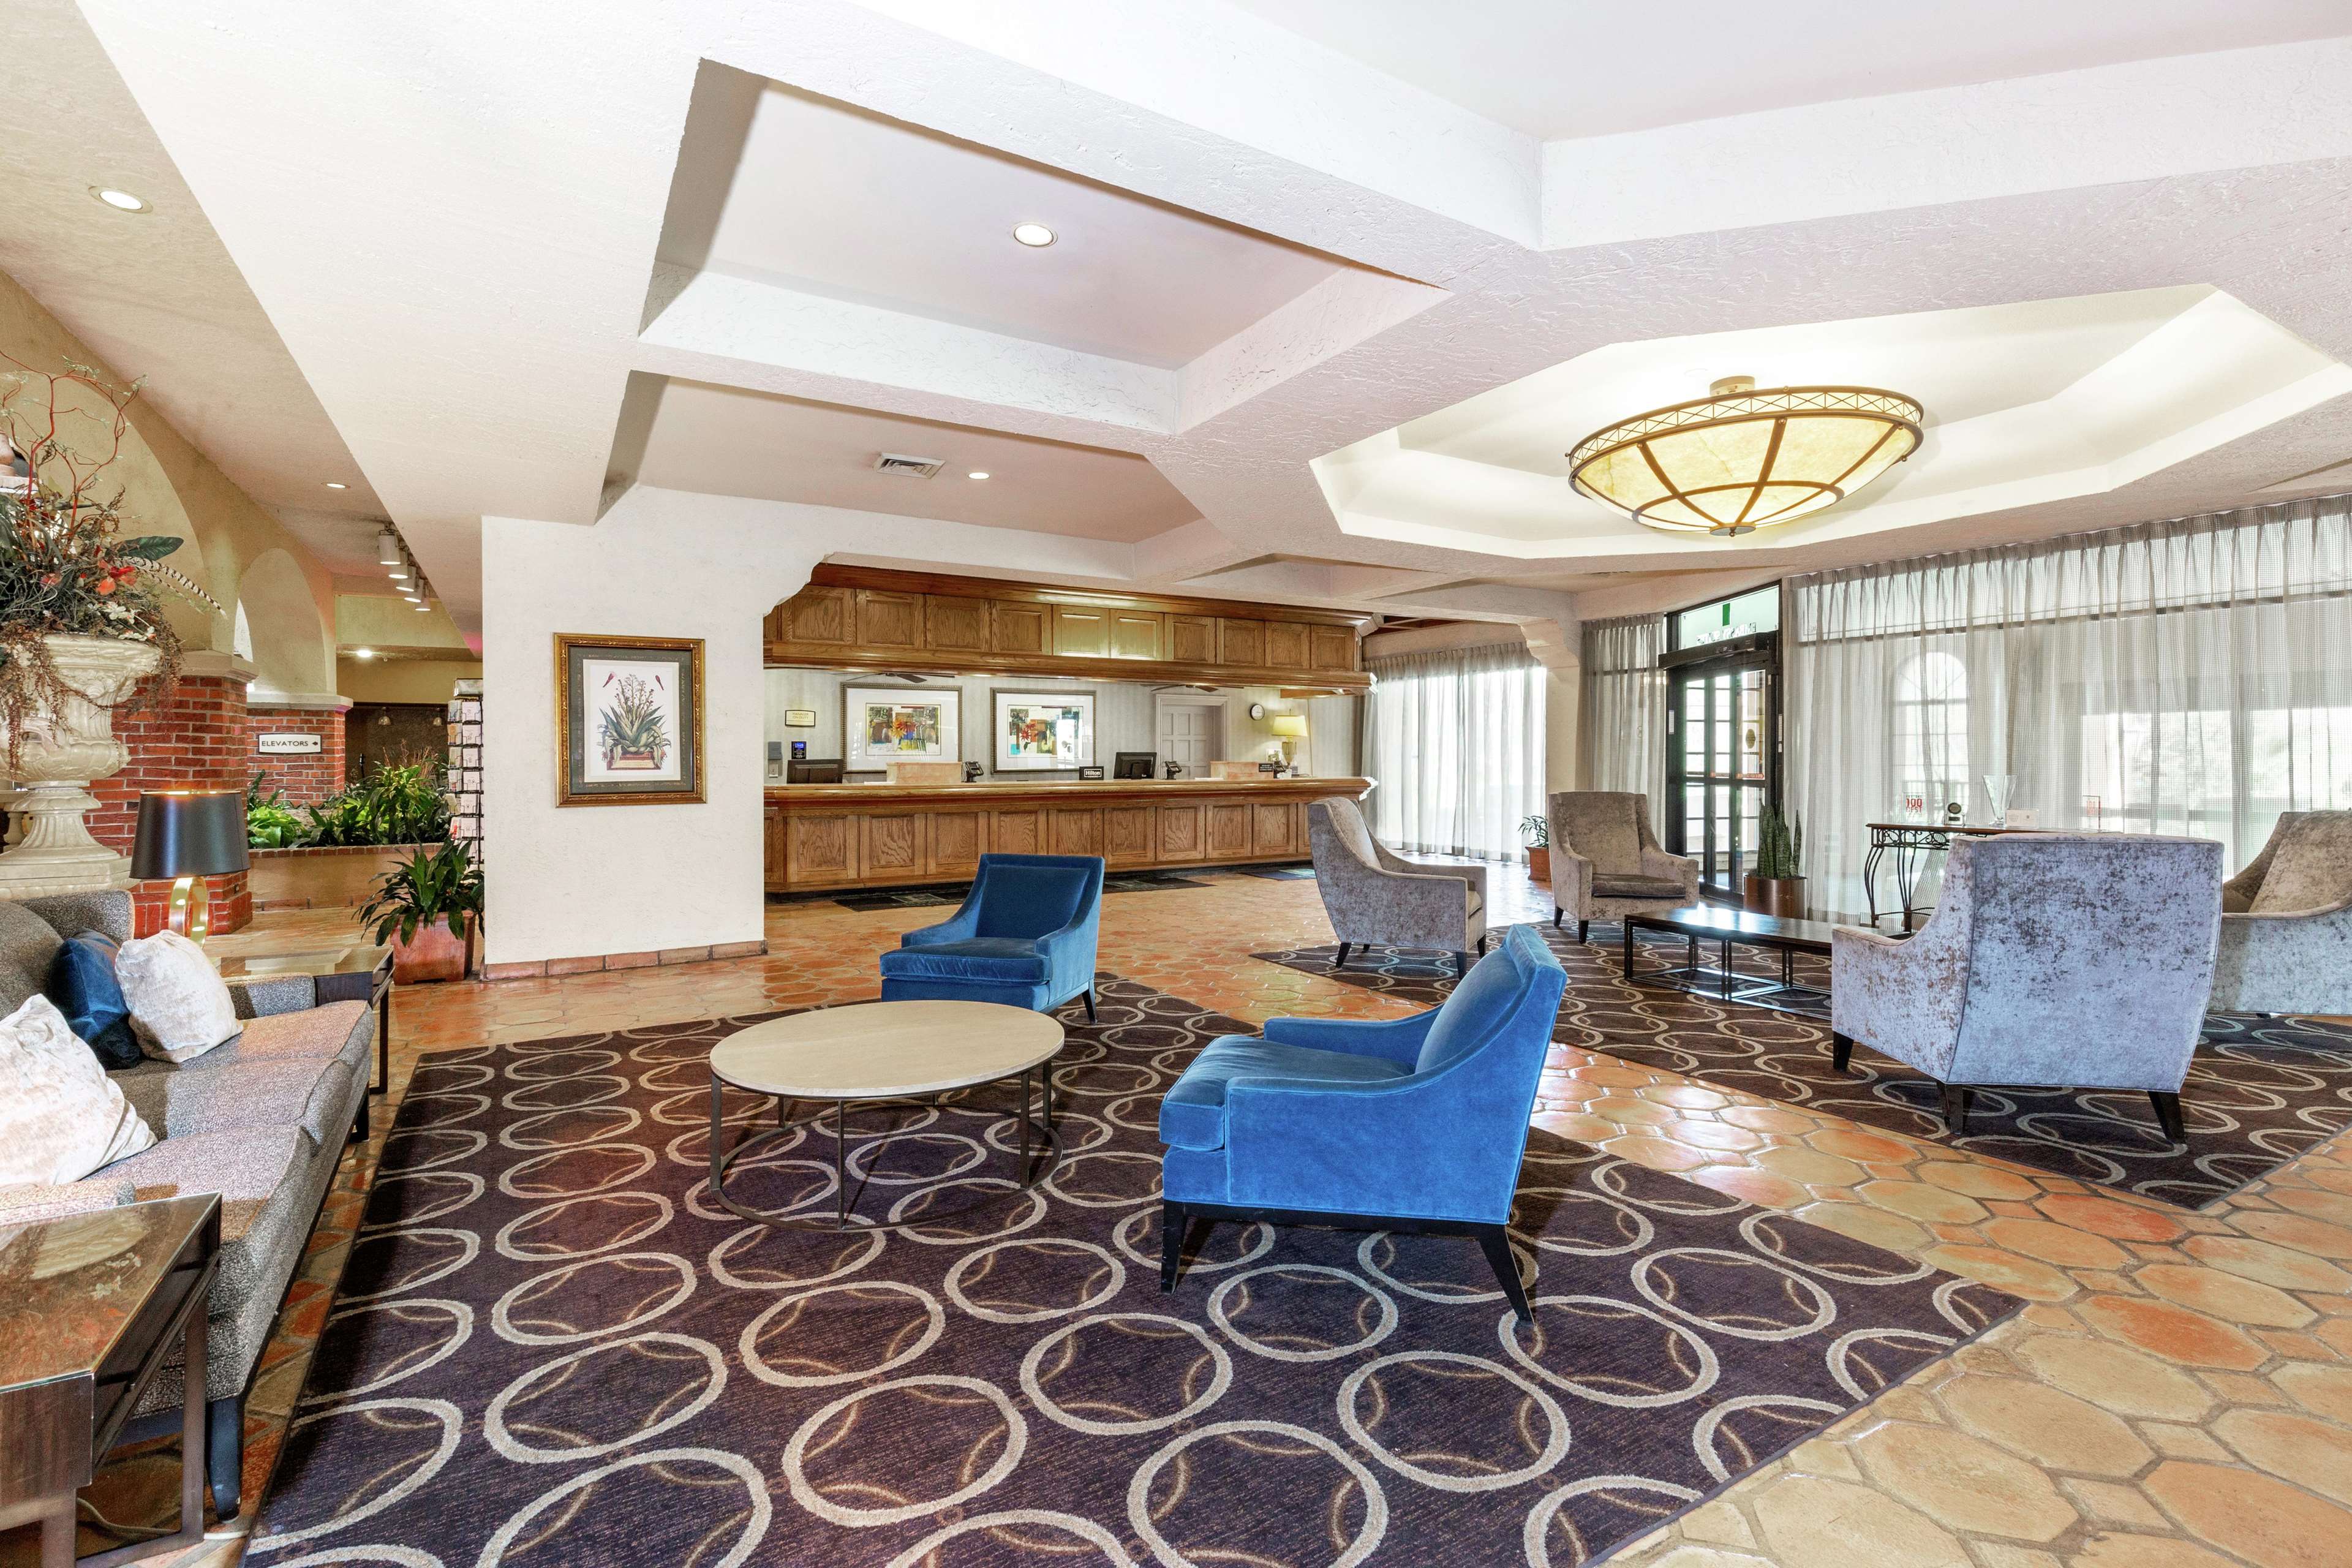 Embassy Suites by Hilton Kansas City- Plaza Photo